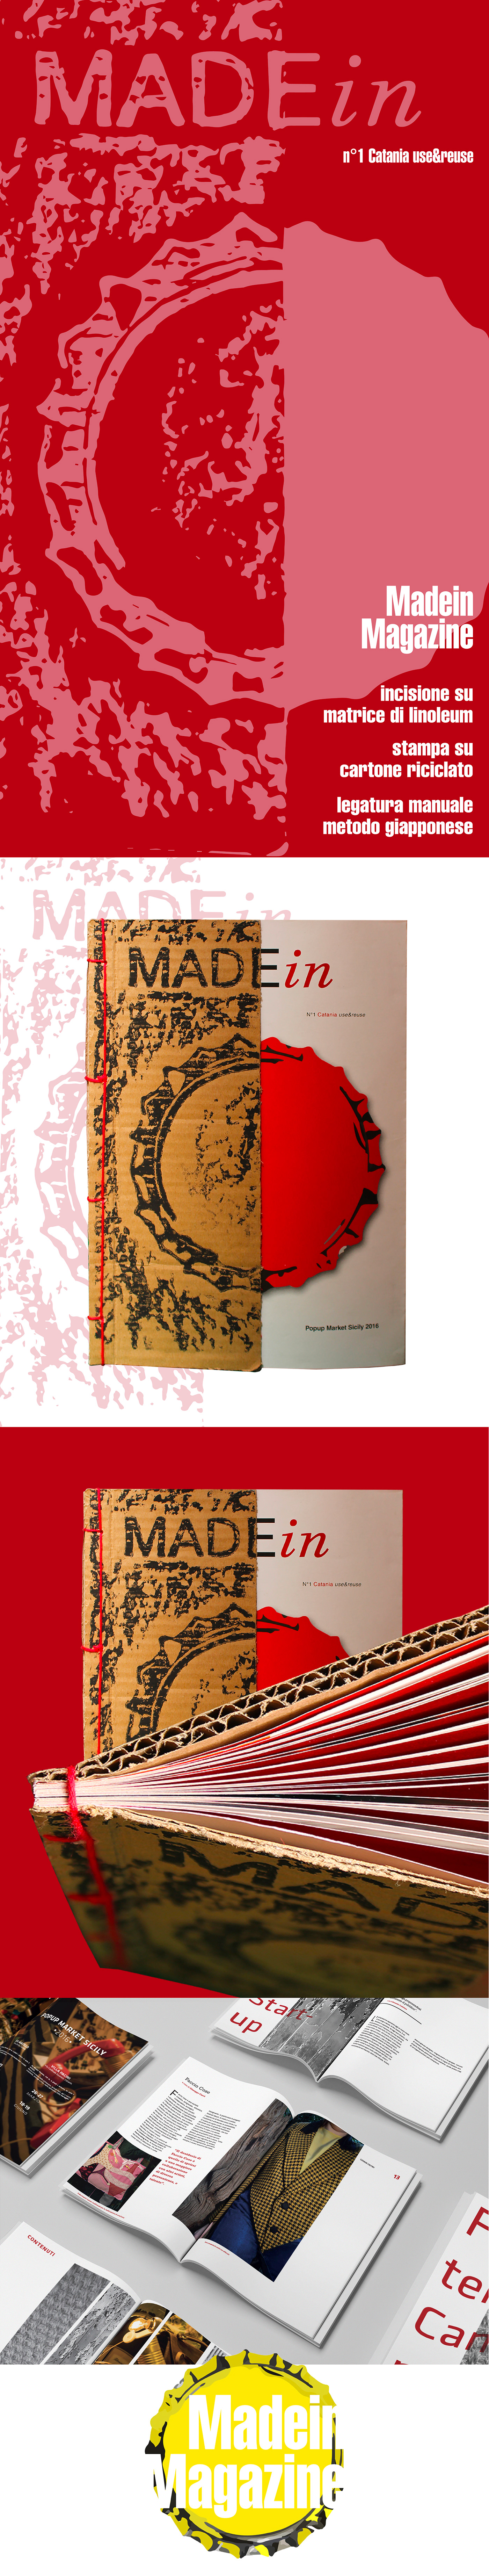 editorialdesign linoleum cut linoleum print handmade bookbinding artistic